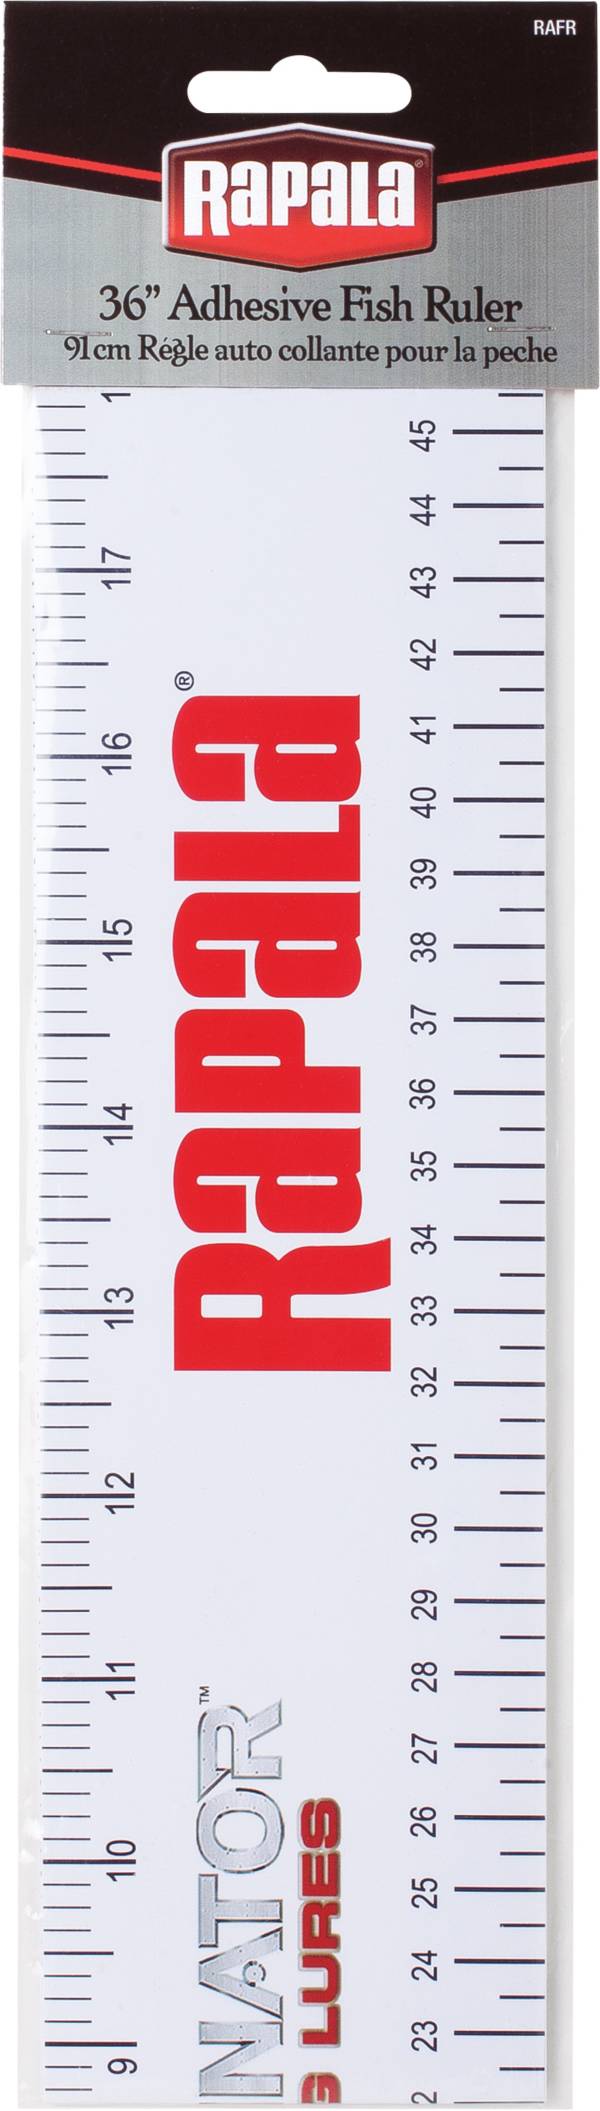 Rapala 36” Adhesive Ruler product image